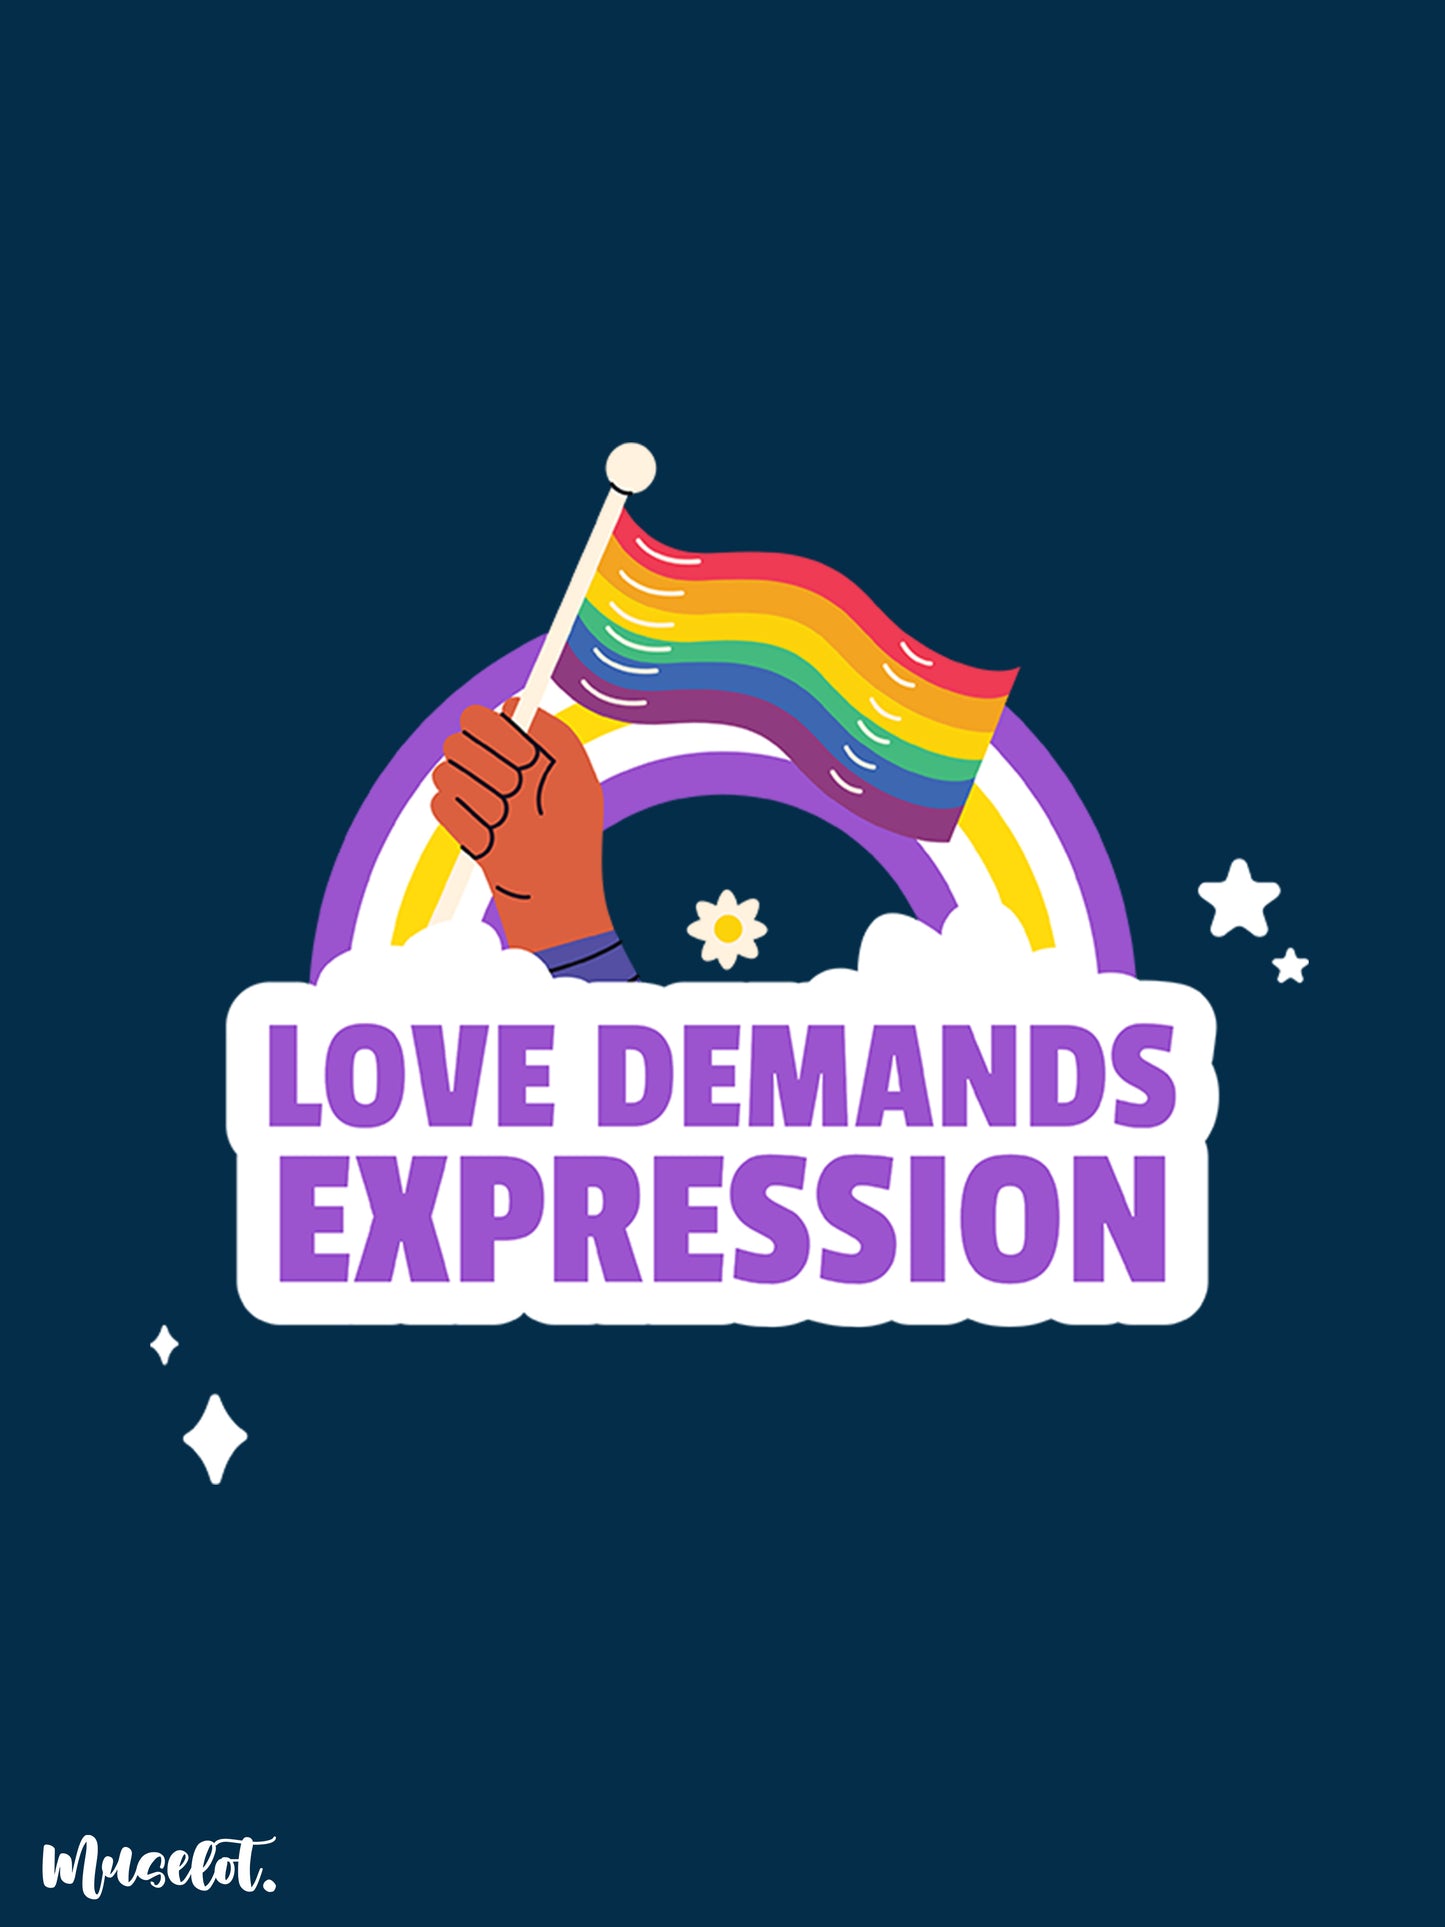 Love demands expression design illustration for LGBTQ+ pride at Muselot